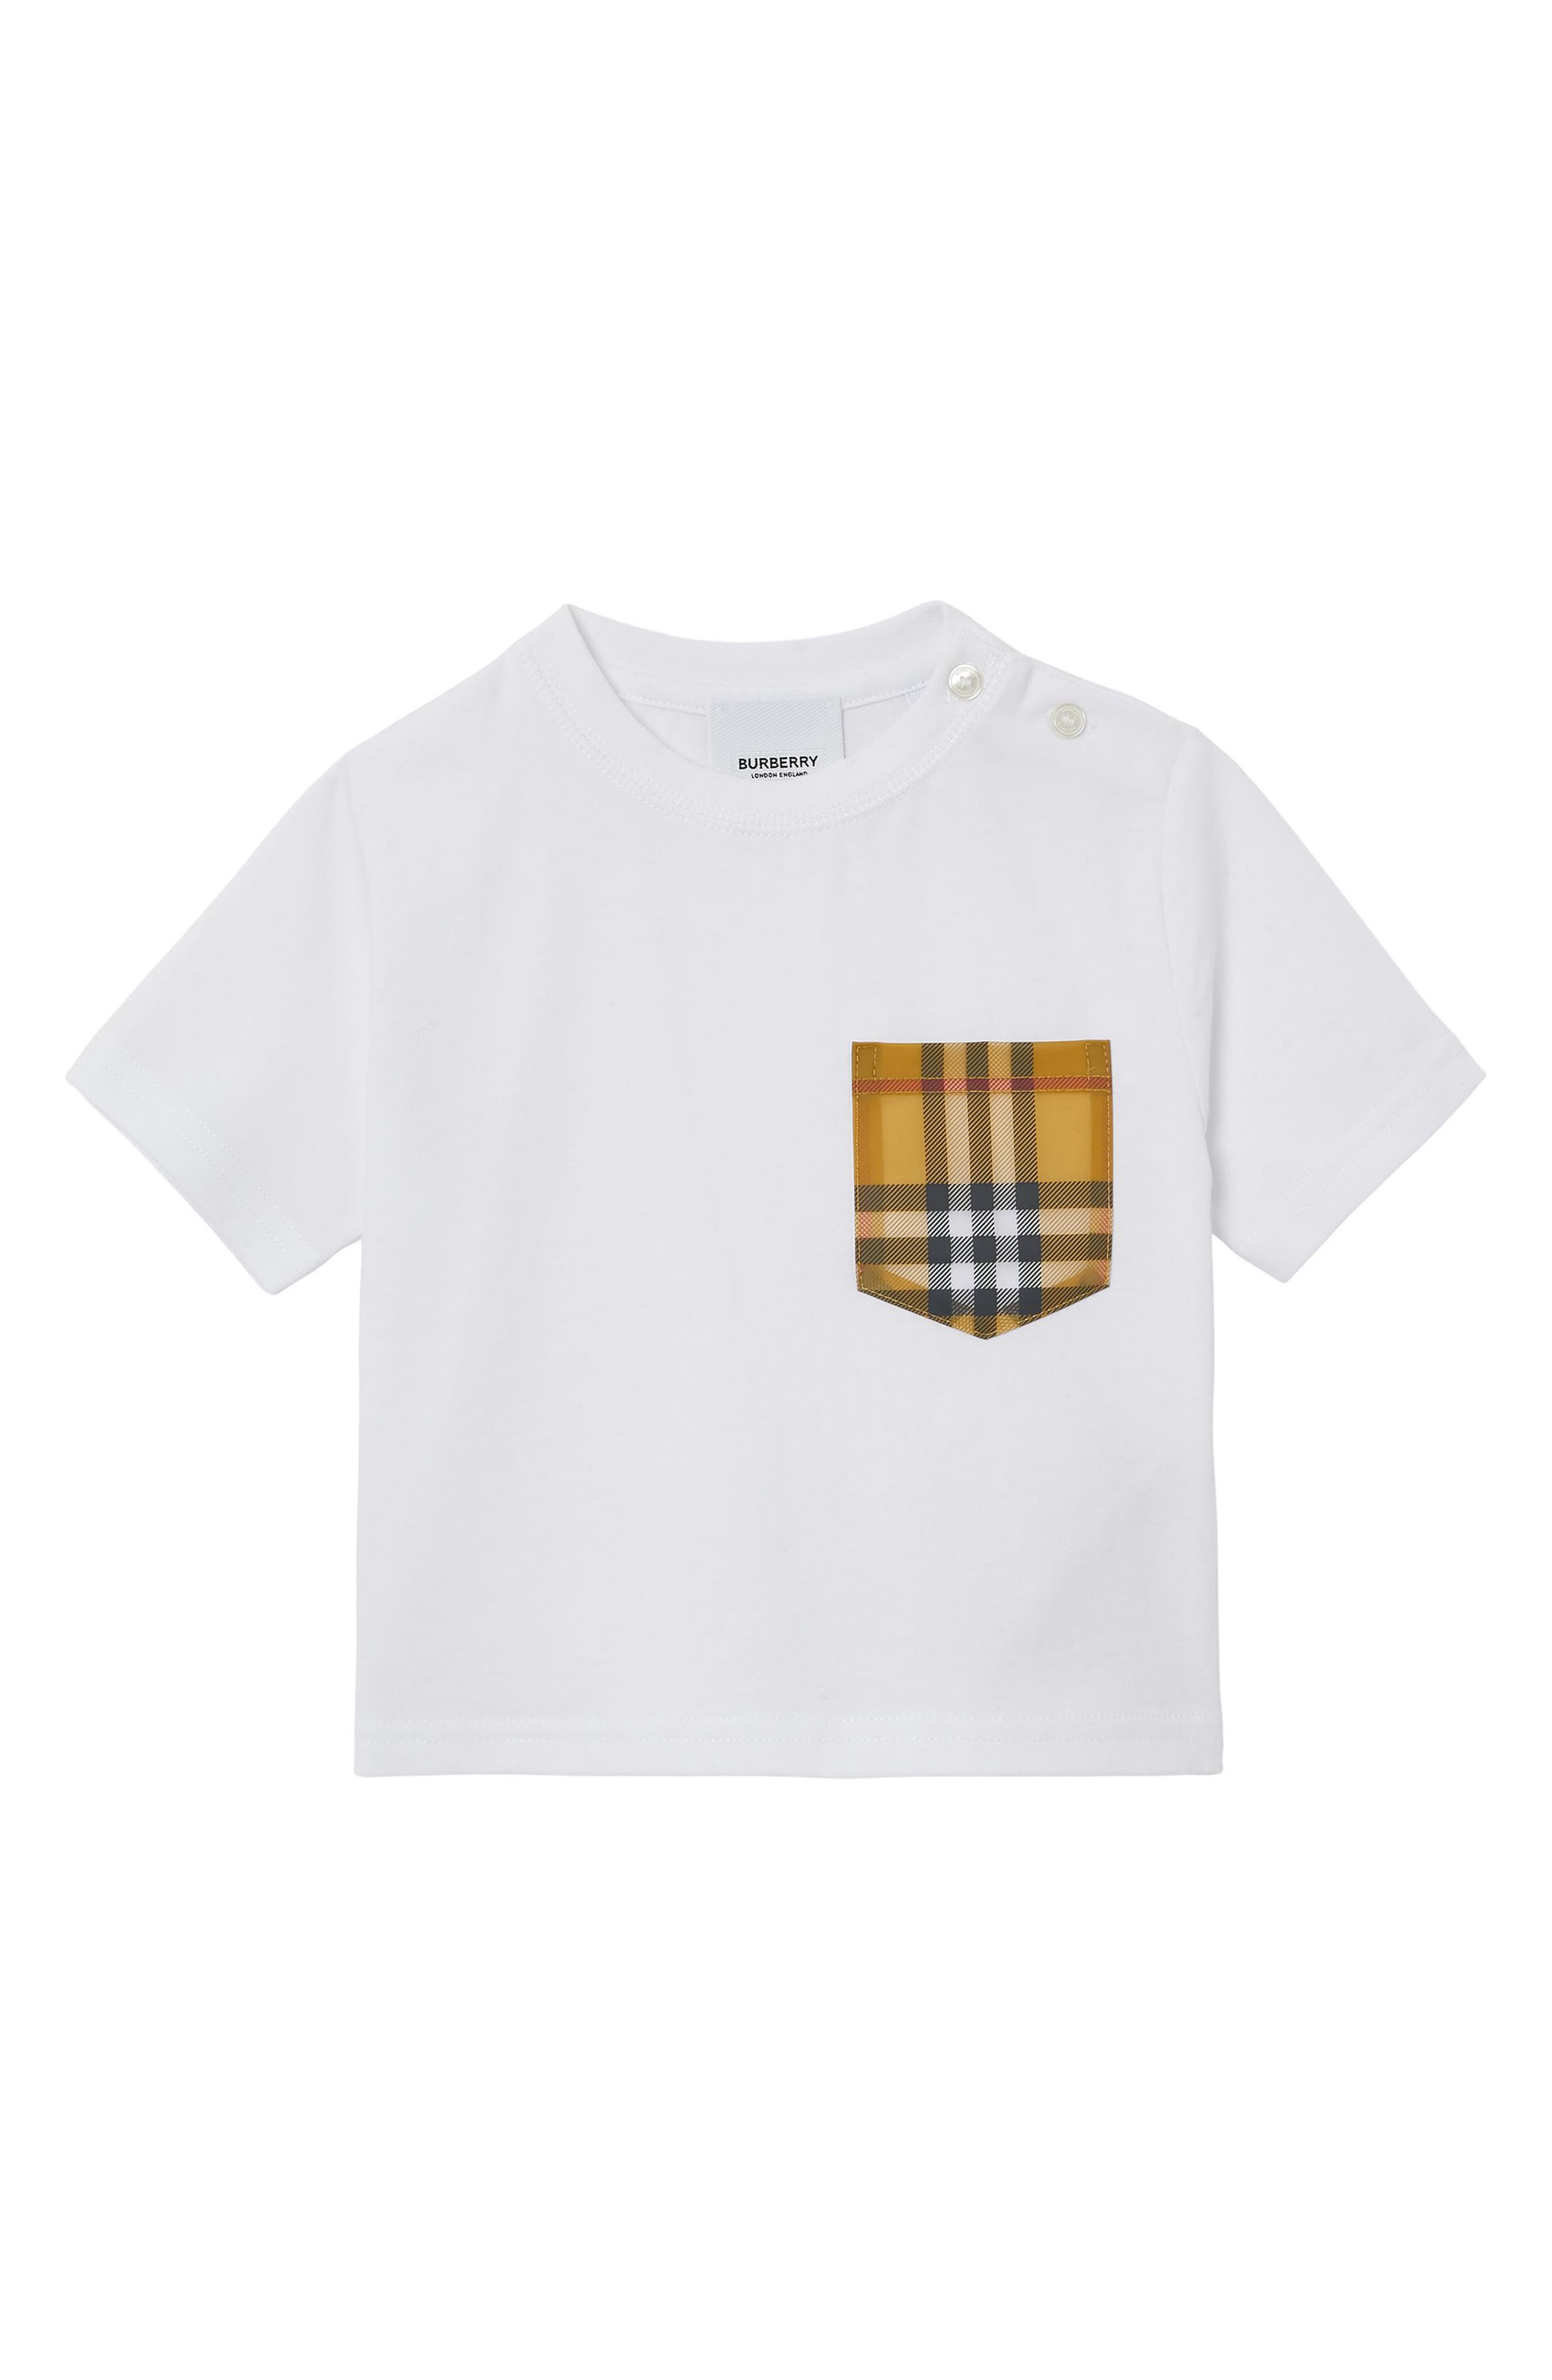 Boys Burberry Shirt Top Sellers, 60% OFF | www.ingeniovirtual.com